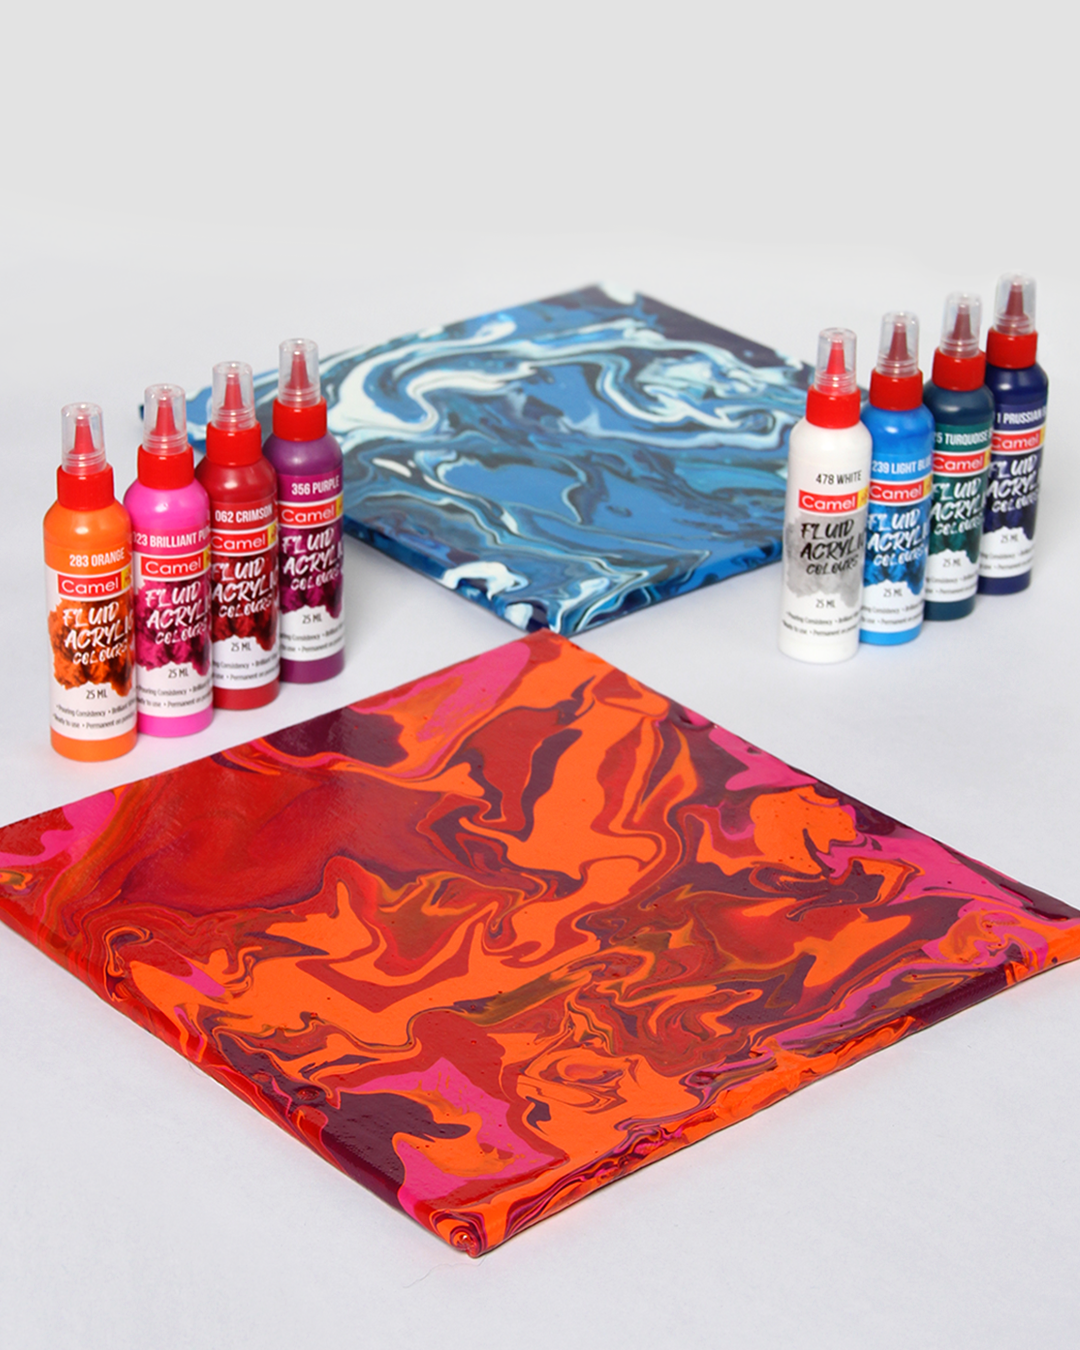 Camel Fluid Acrylic Colours Kit Sunset Series